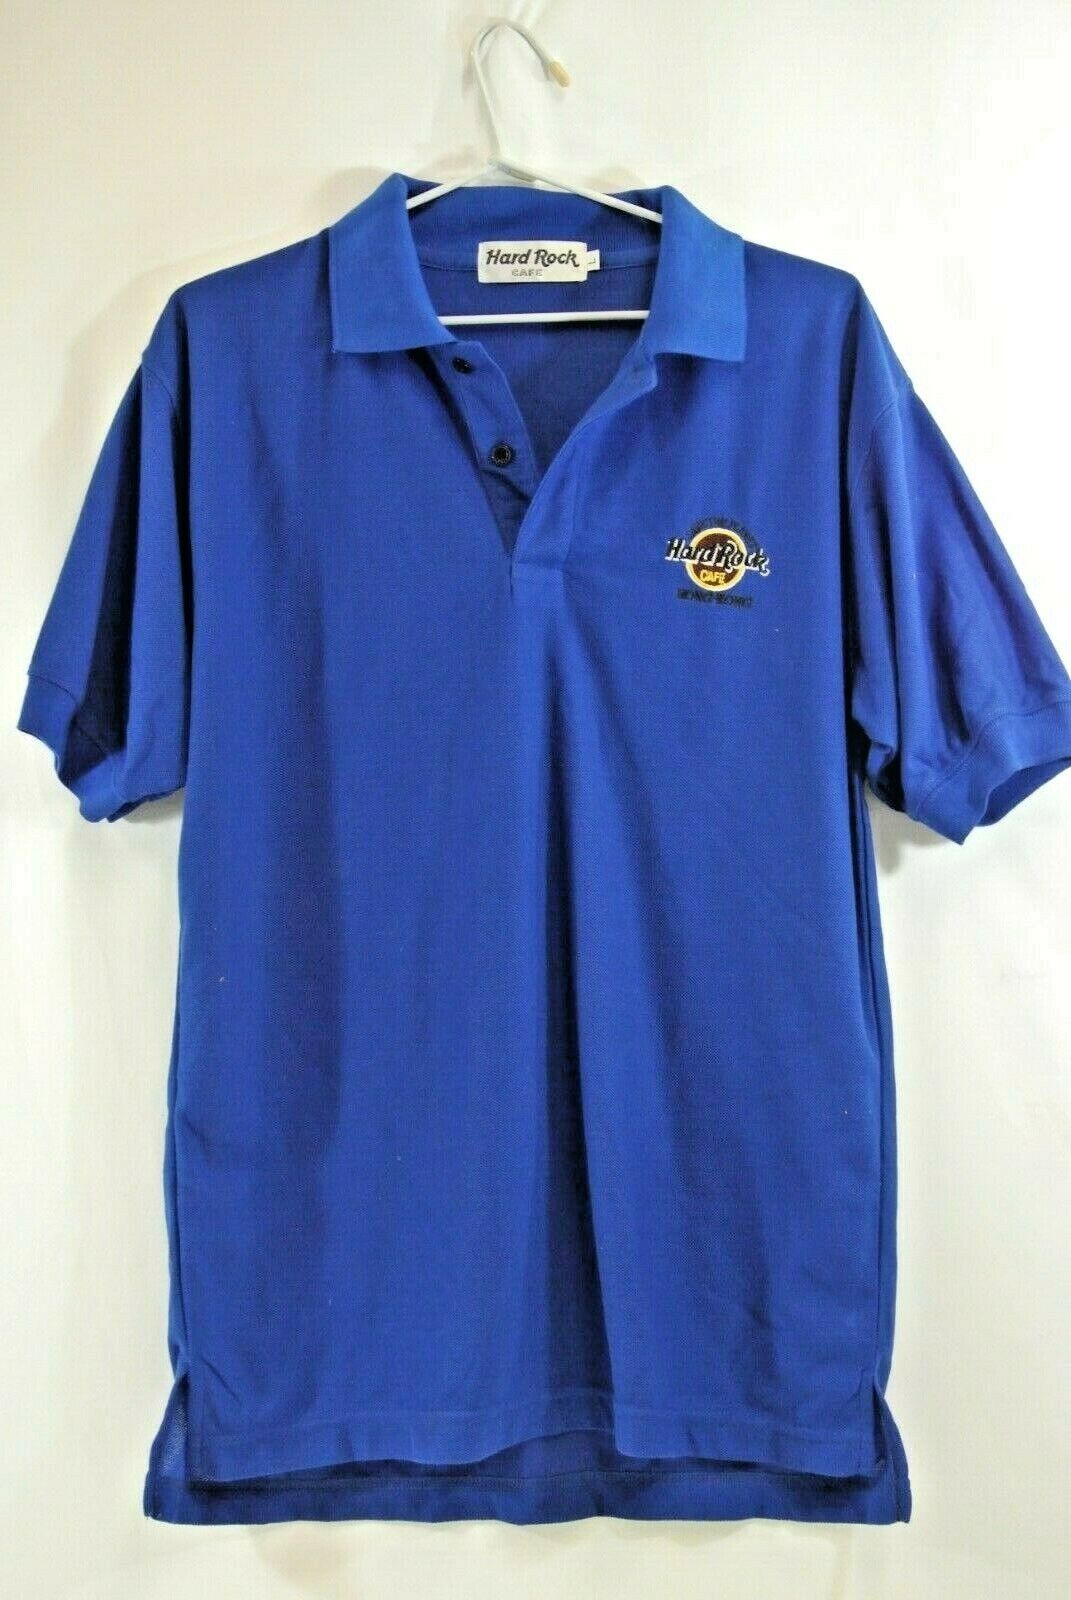 Hard Rock Cafe Hong Kong Polo Shirt Blue Save the Planet Mens Large Golf VTG 80s - $19.34